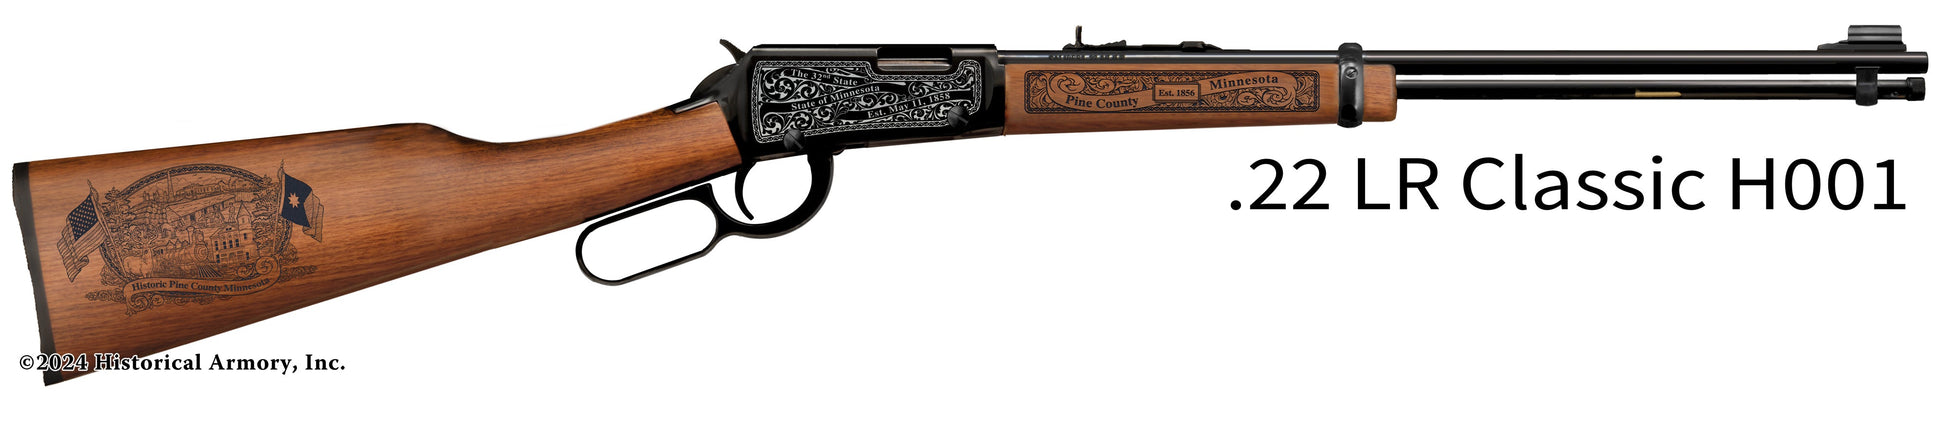 Pine County Minnesota Engraved Henry H001 Rifle